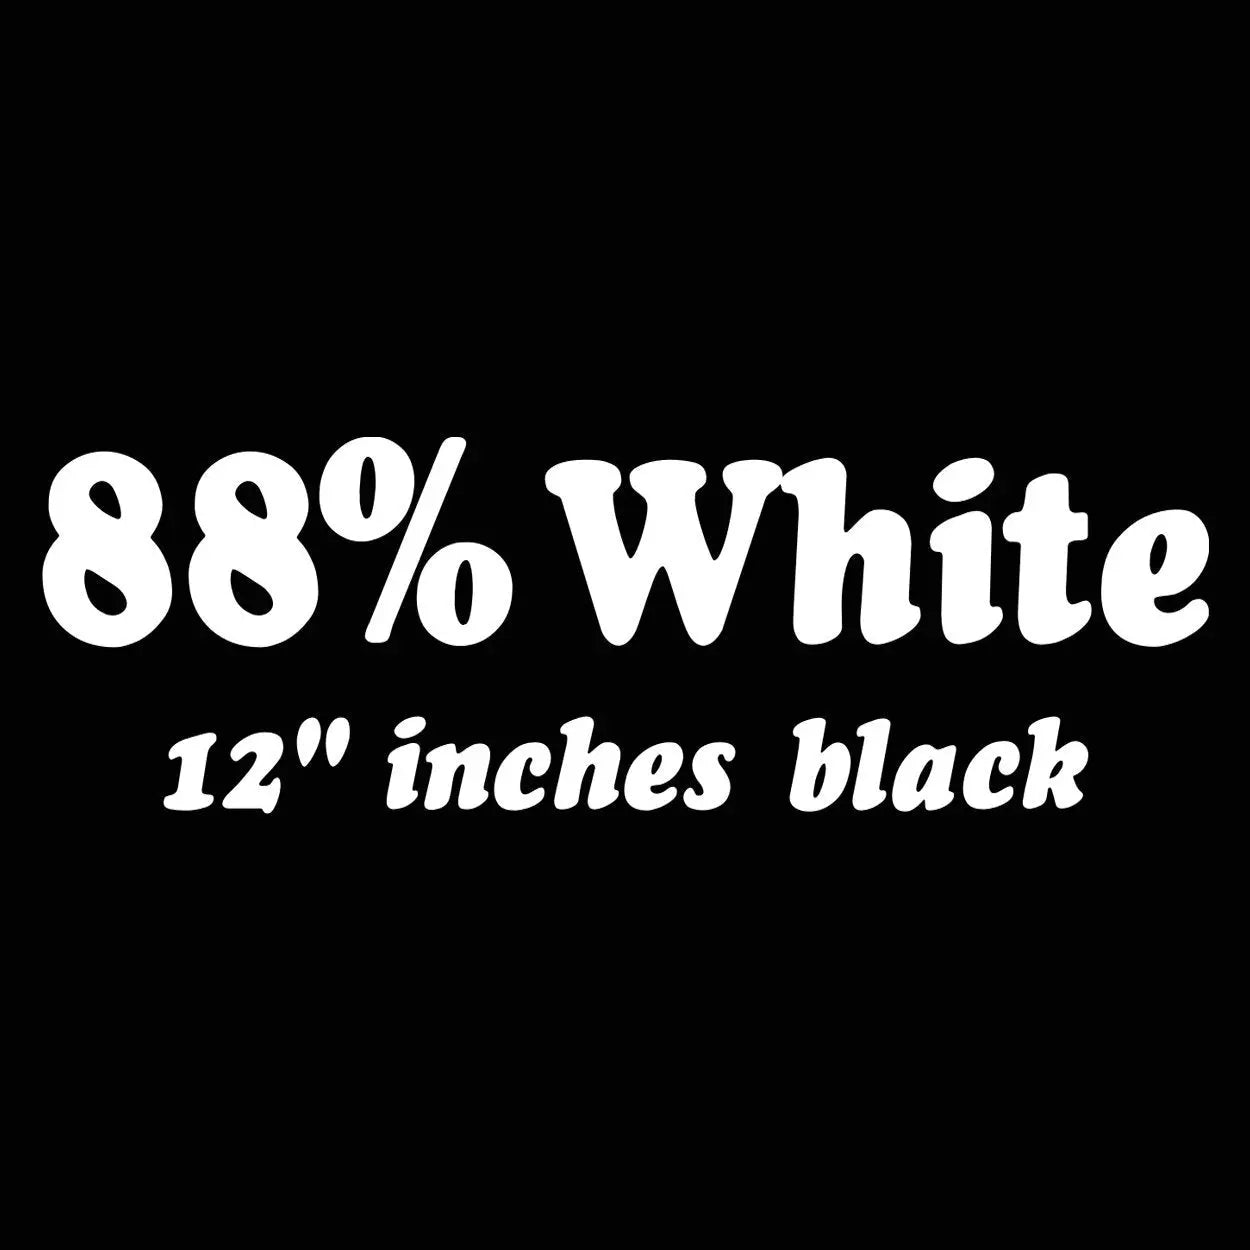 88% White 12 Inches Black Tshirt - Donkey Tees